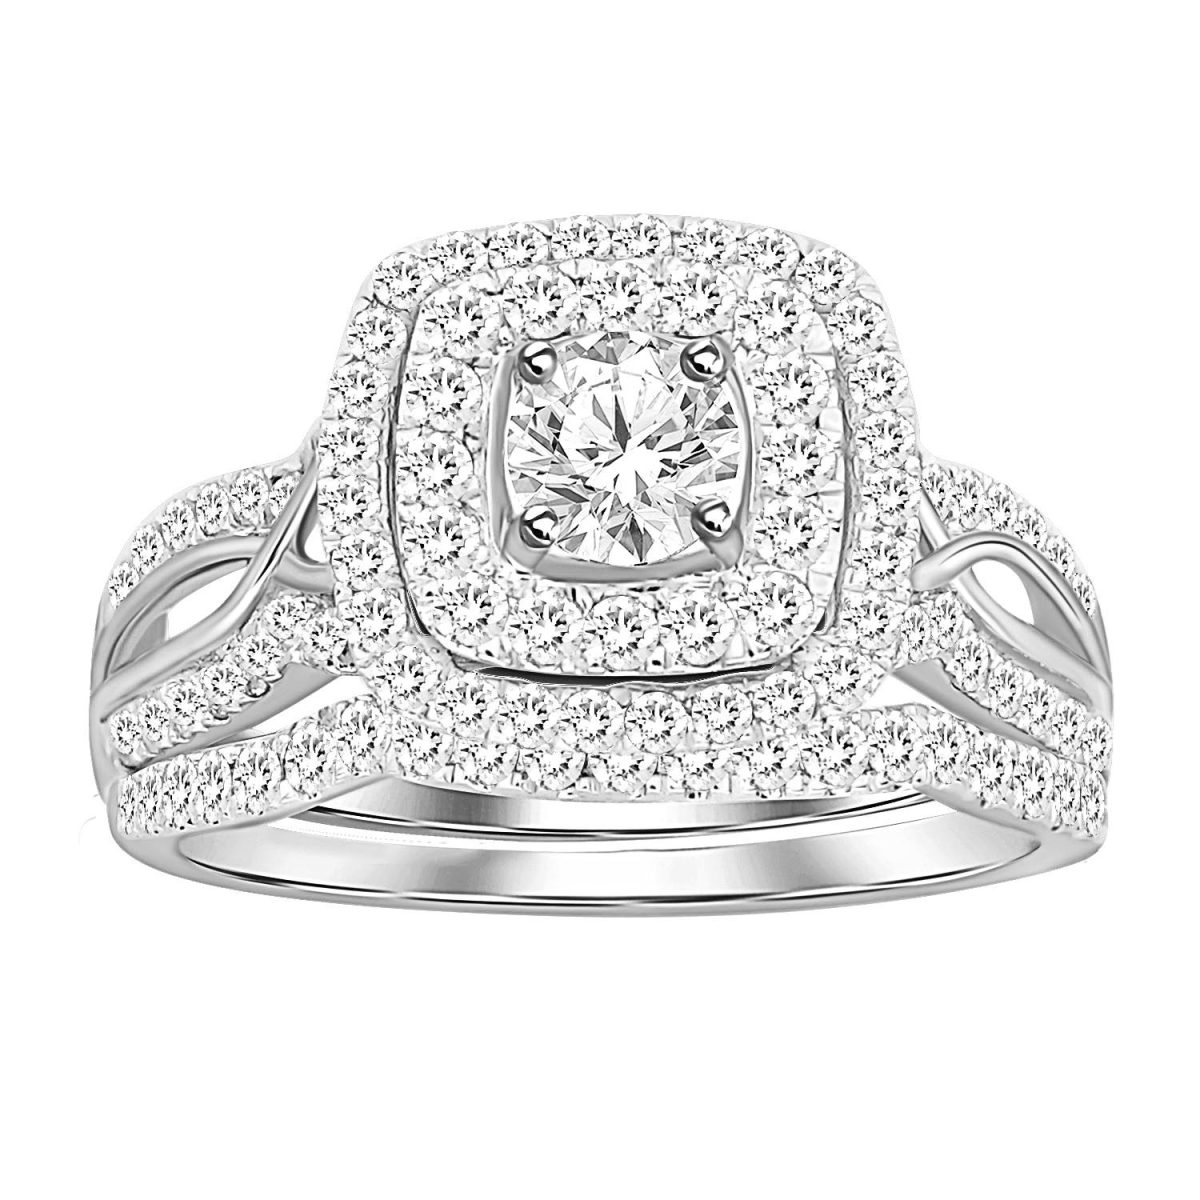 0018496 ladies bridal ring set 1 ct roundprincess diamond 14k white gold